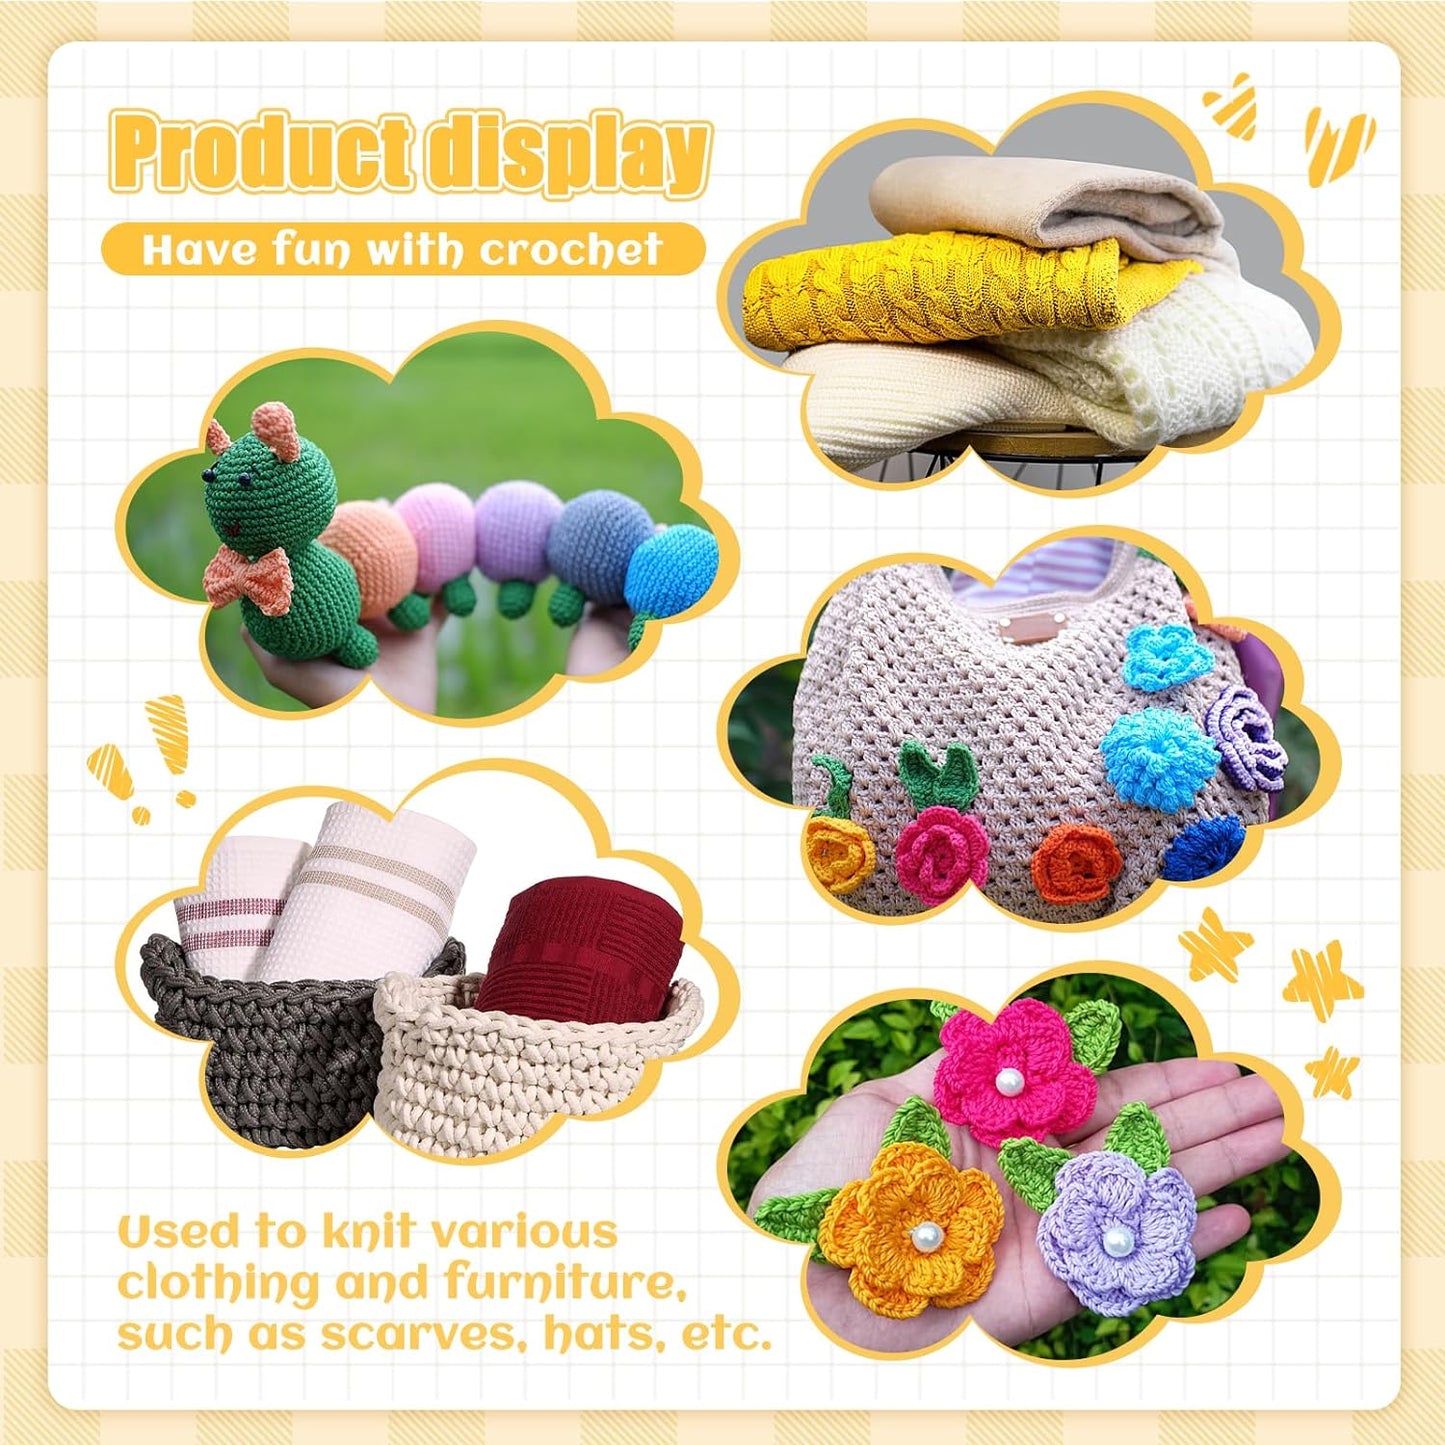 54 Pcs Crochet Needles Set, Crochet Hooks Kit with Storage Case, Ergonomic Knitting Needles Blunt Needles Stitch Marker DIY Hand Knitting Craft Art Tools for Beginners